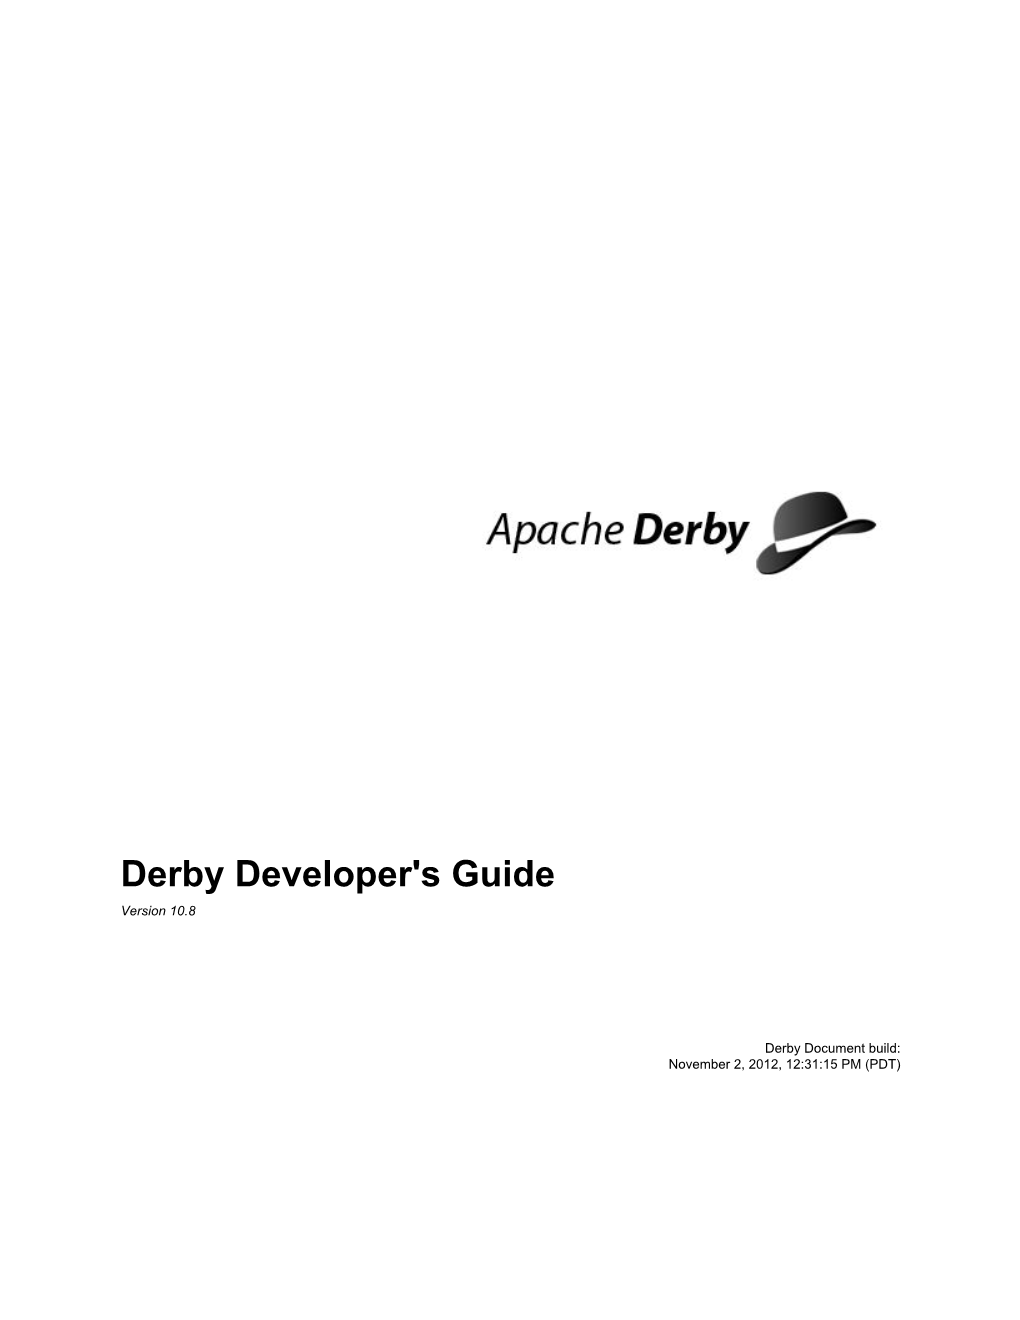 Derby Developer's Guide Version 10.8